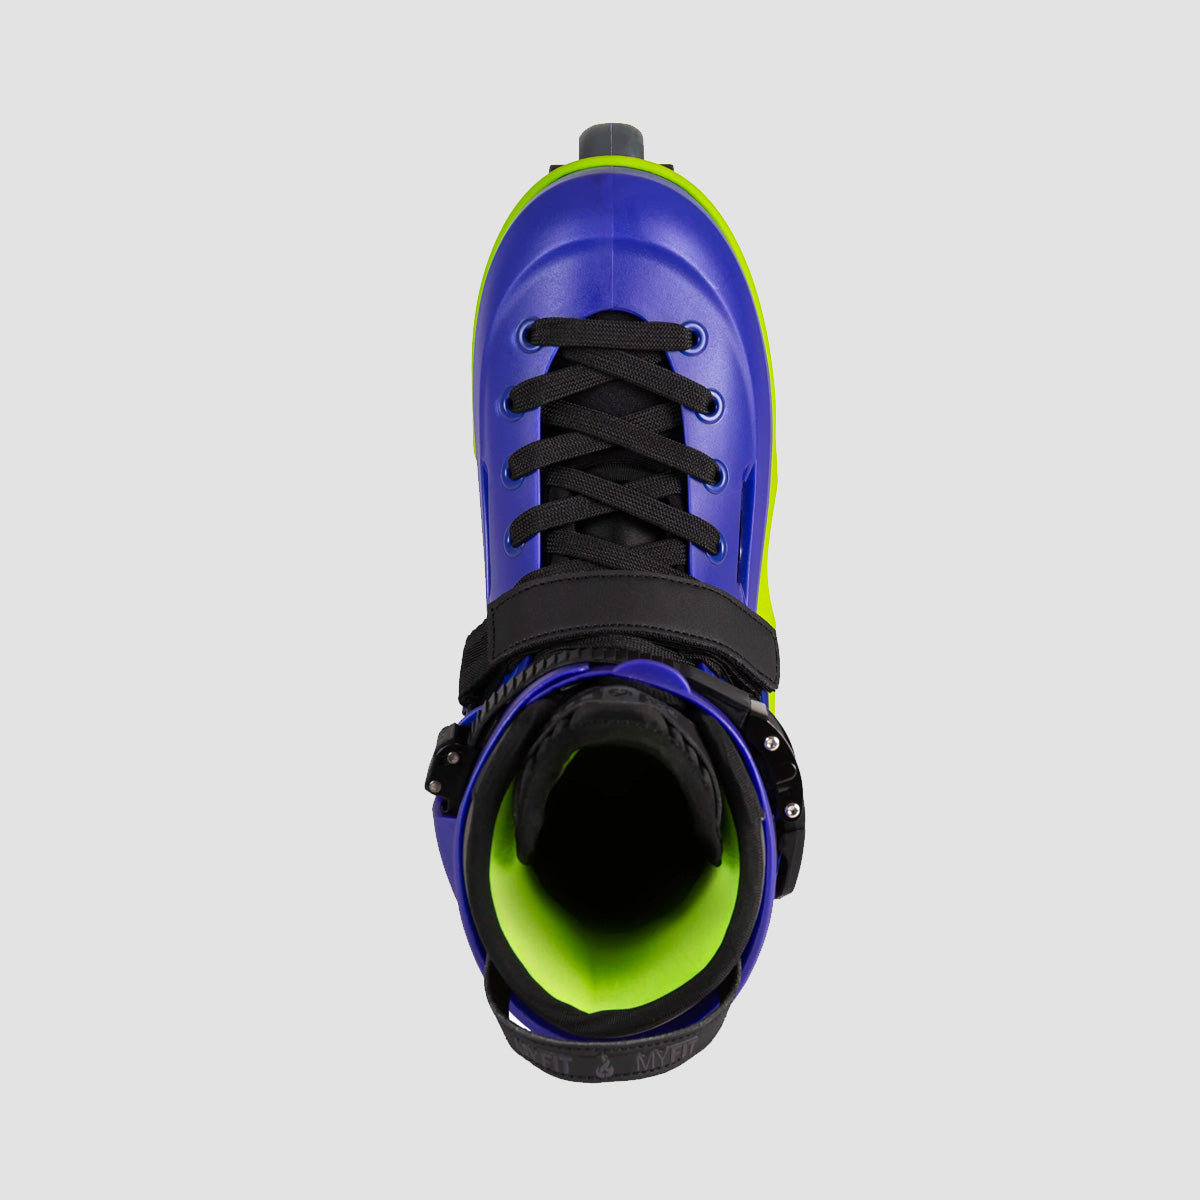 USD Sway Carlos Bernal Pro Aggressive Inline Skates Blue/Neon green/Black